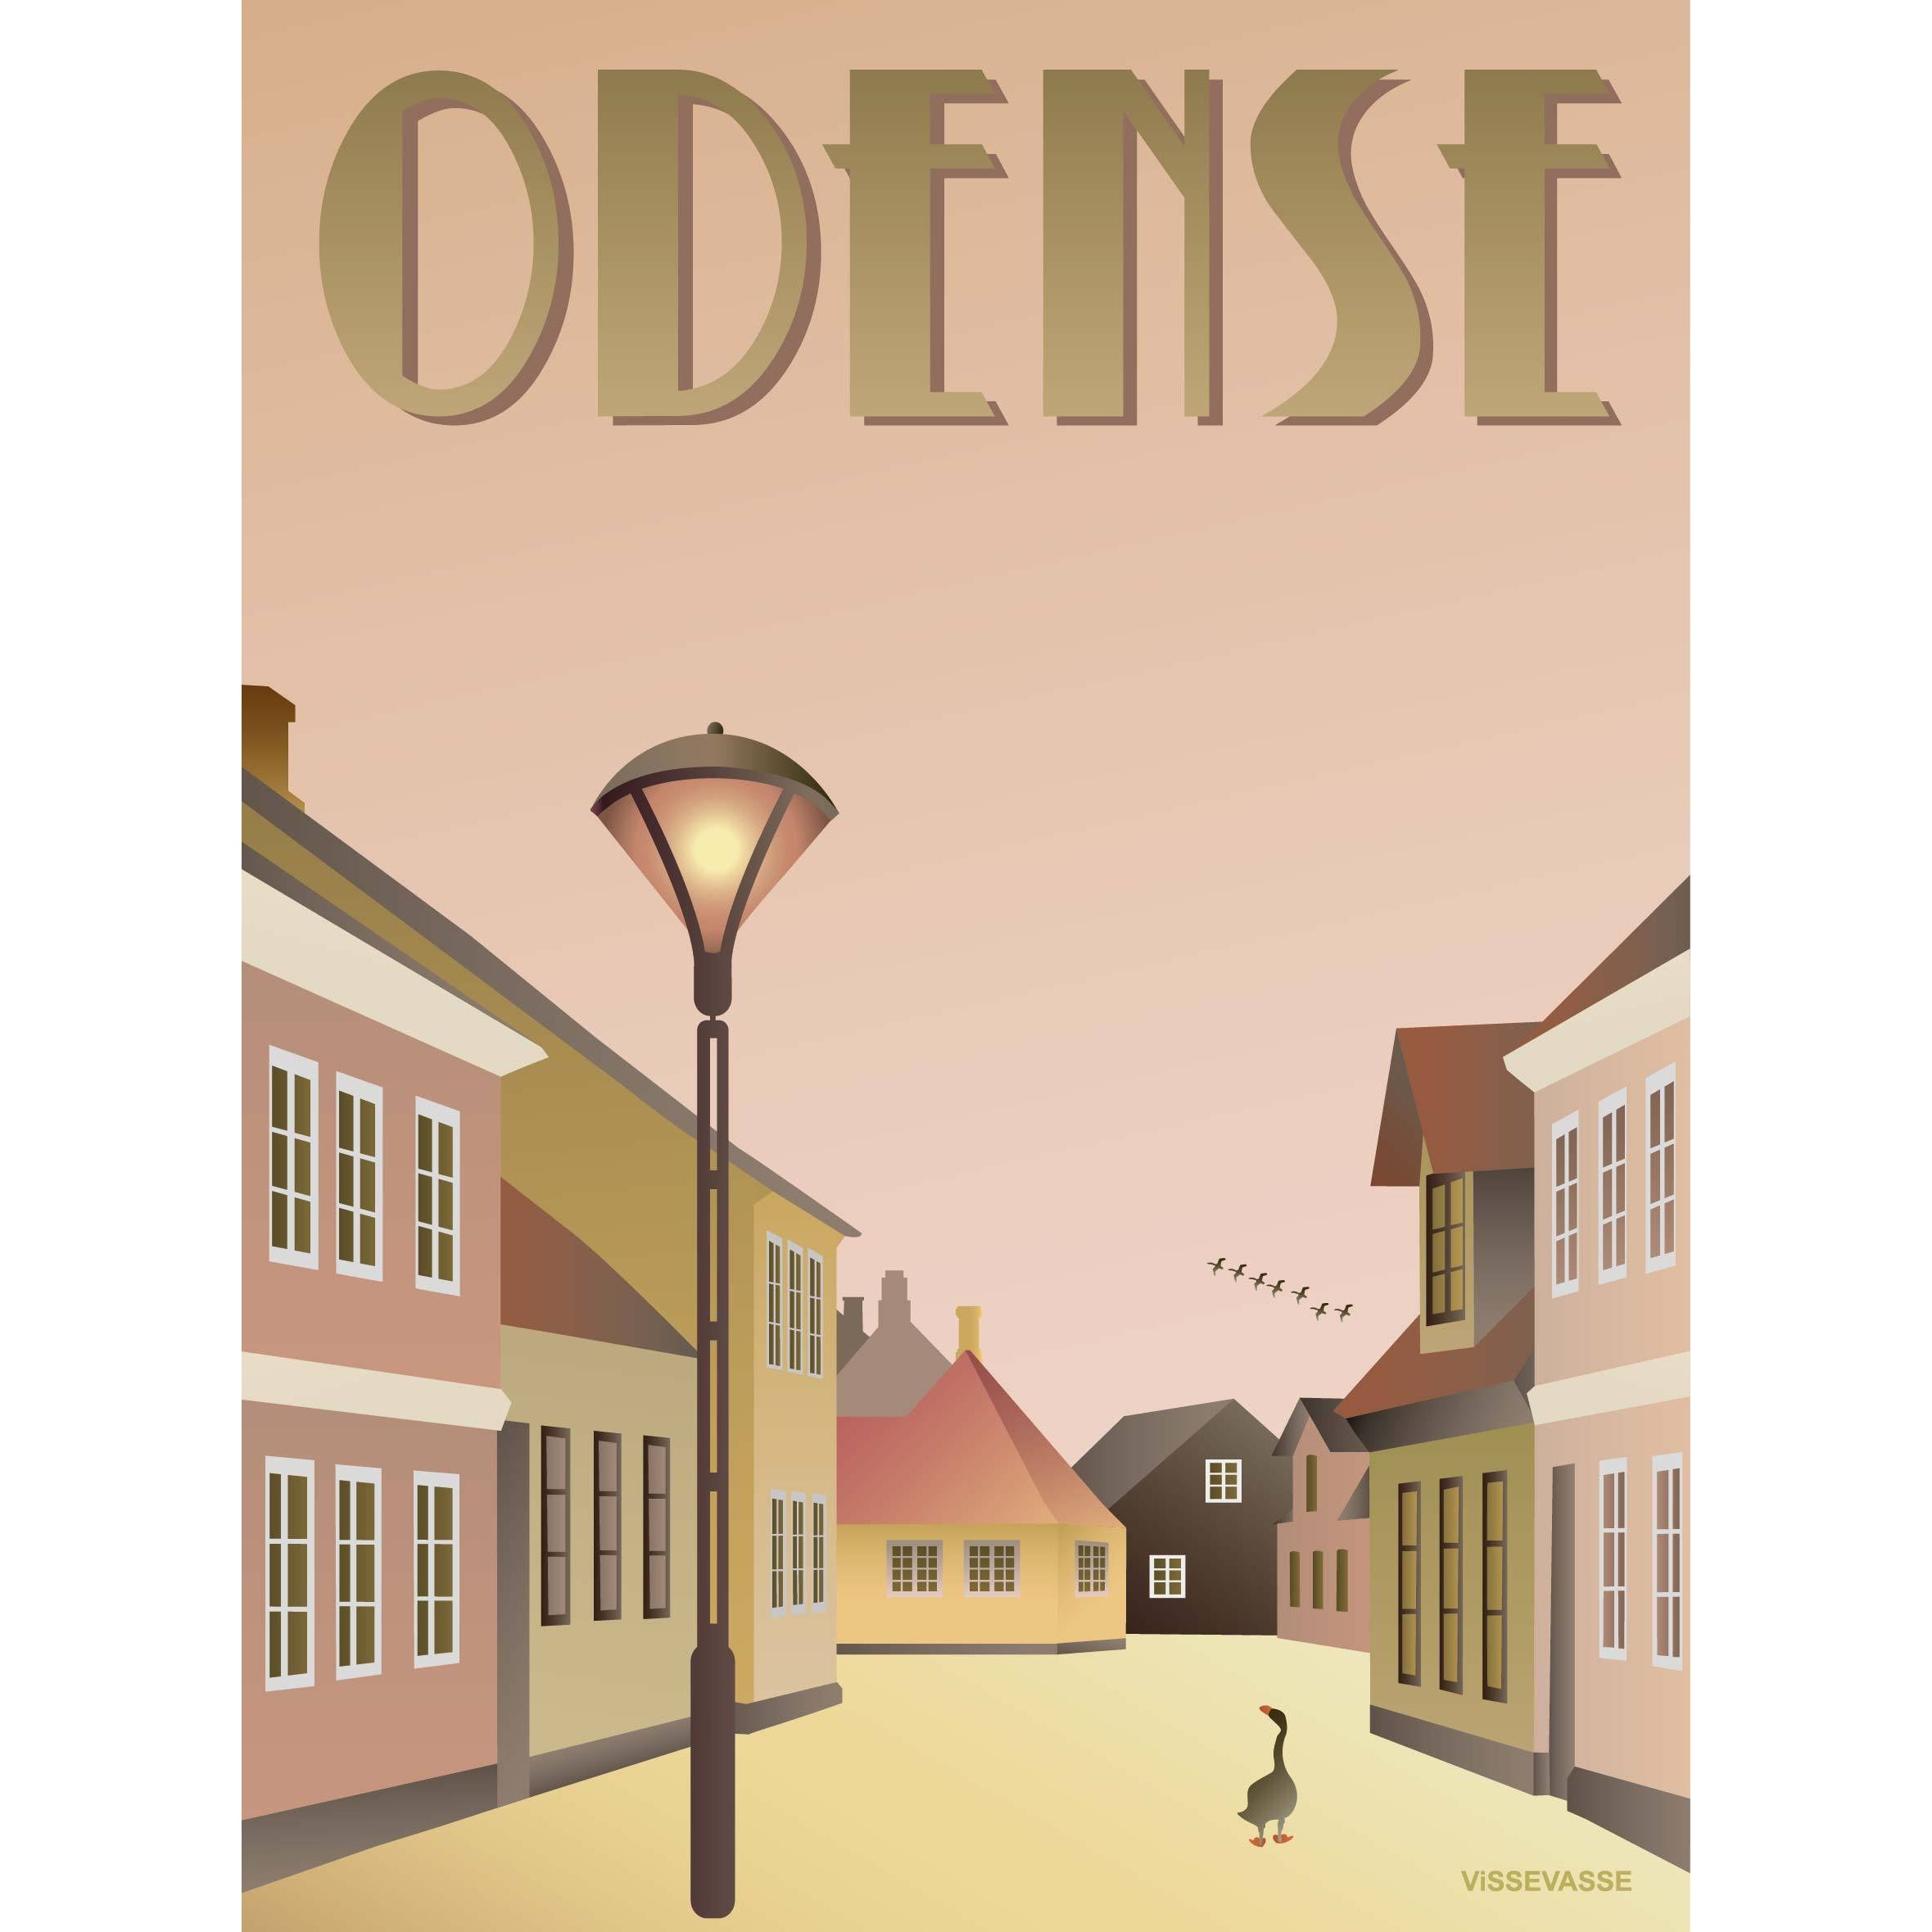 Vissevasse Odense Duckling Poster, 15x21 cm